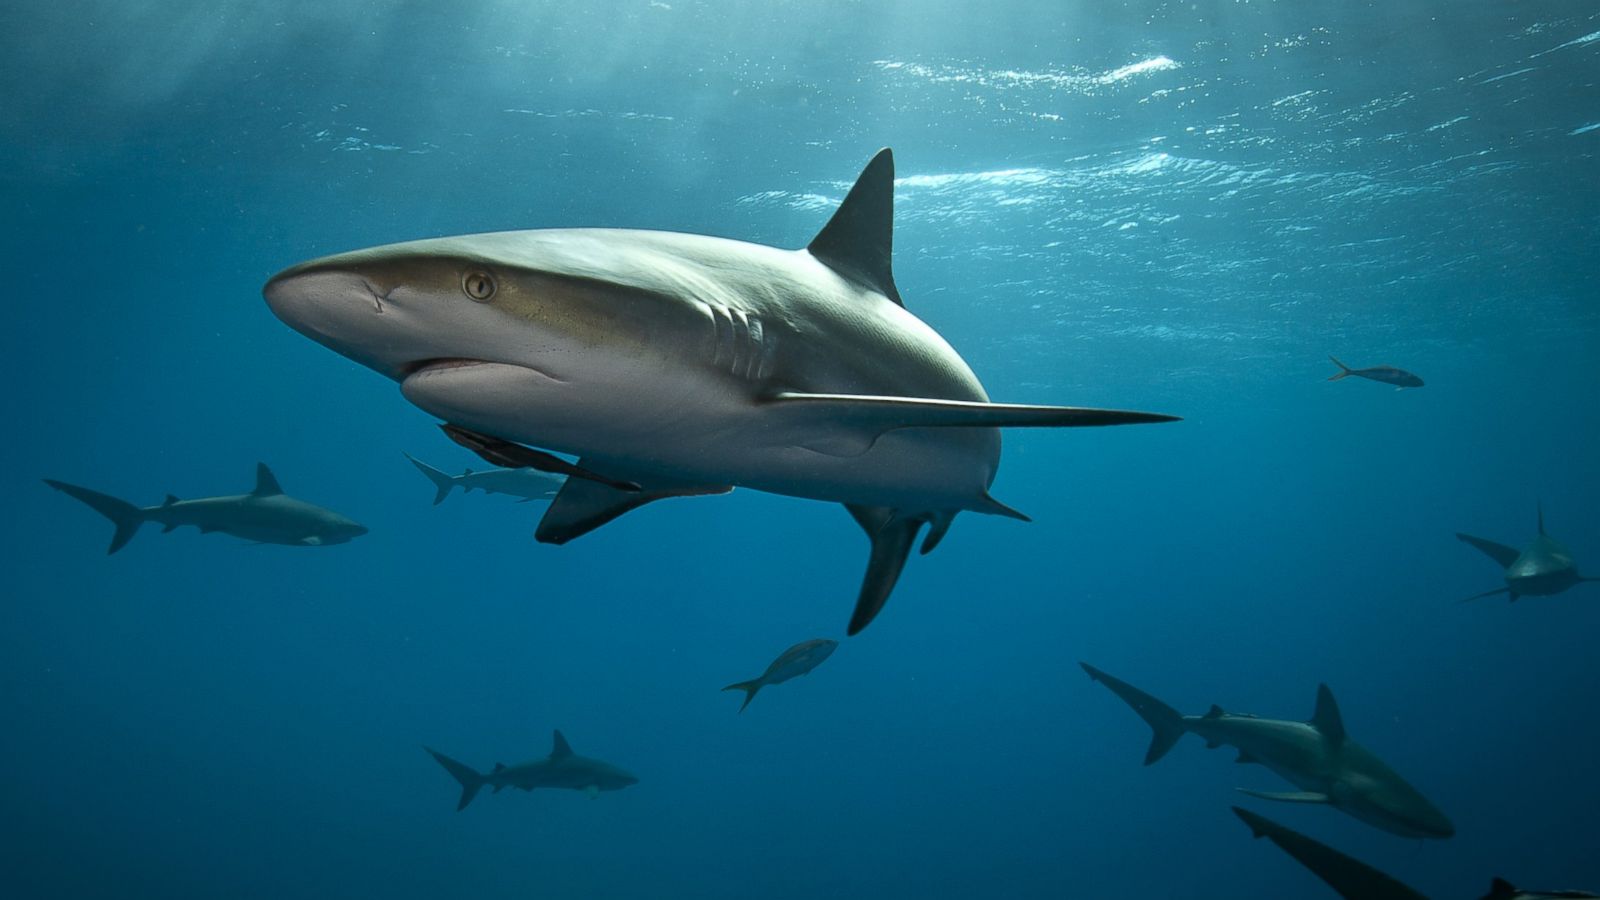 A history of shark attacks in Texas